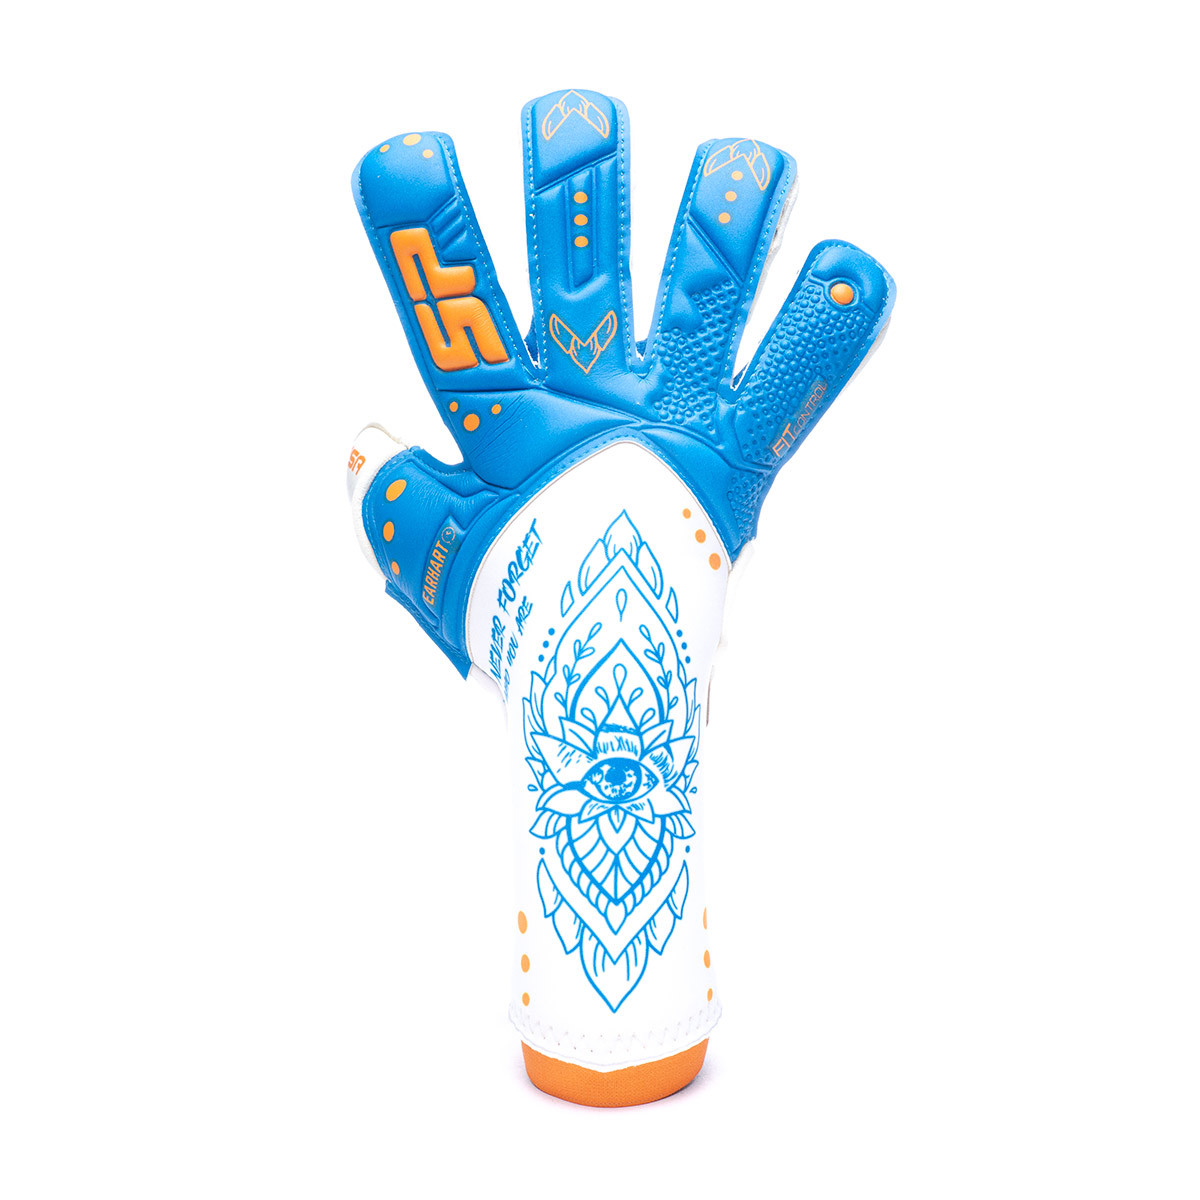 Goalkeeper gloves - 88 Pro Grip